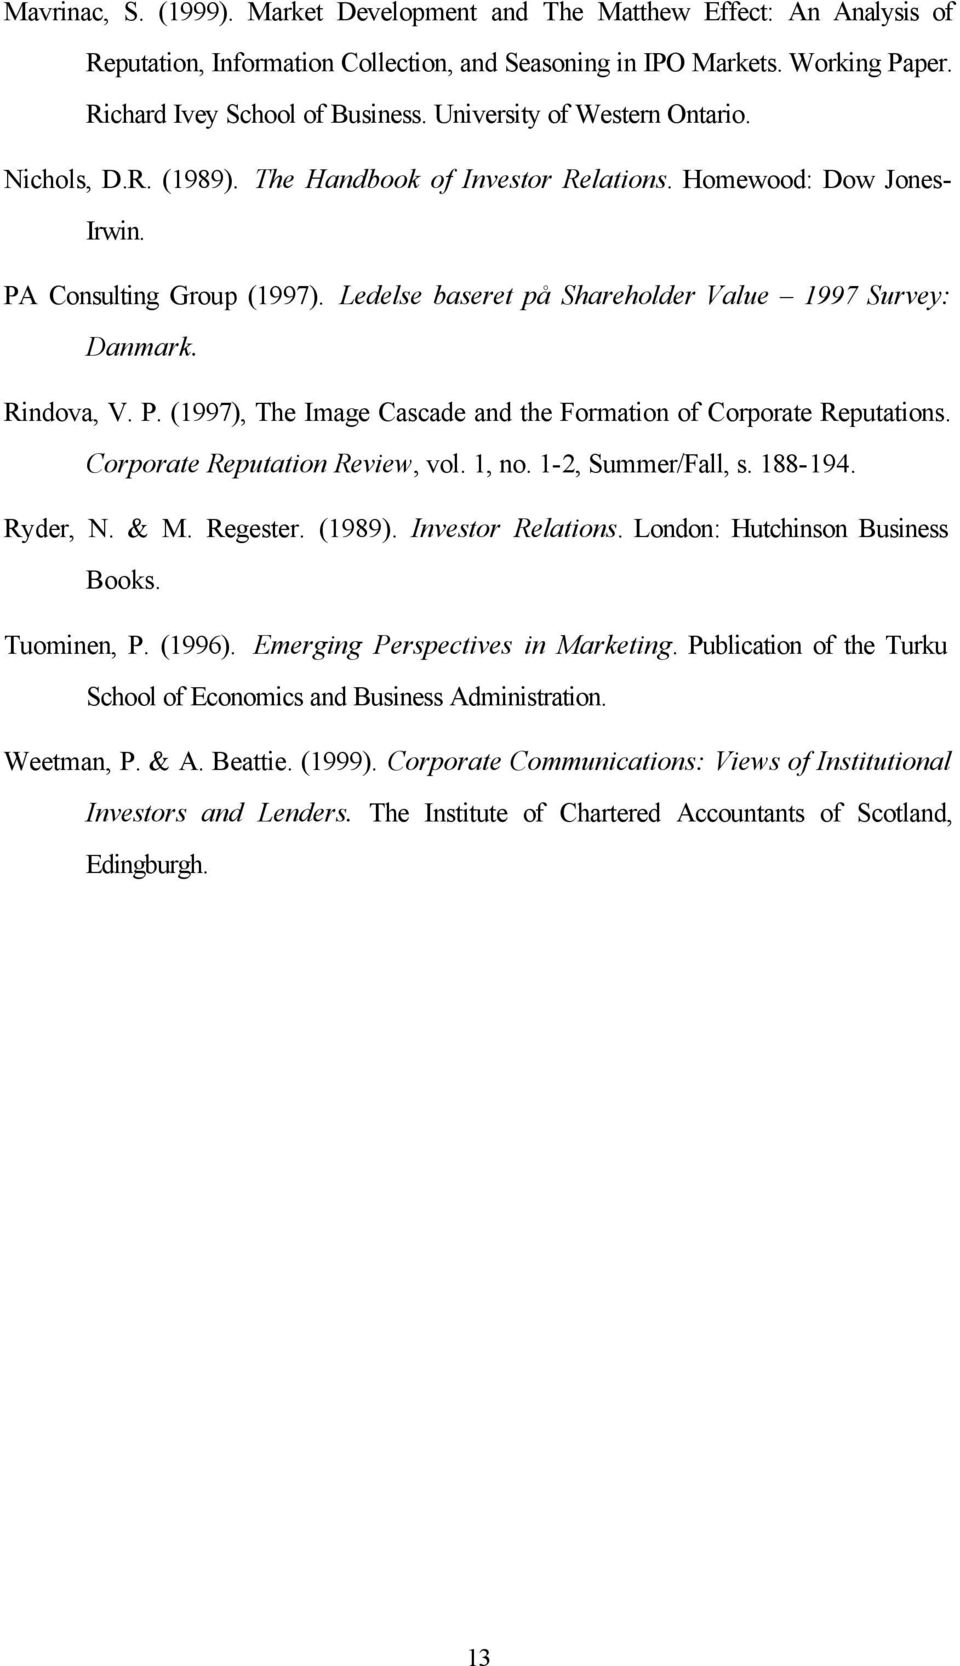 Ledelse baseret på Shareholder Value 1997 Survey: Danmark. Rindova, V. P. (1997), The Image Cascade and the Formation of Corporate Reputations. Corporate Reputation Review, vol. 1, no.